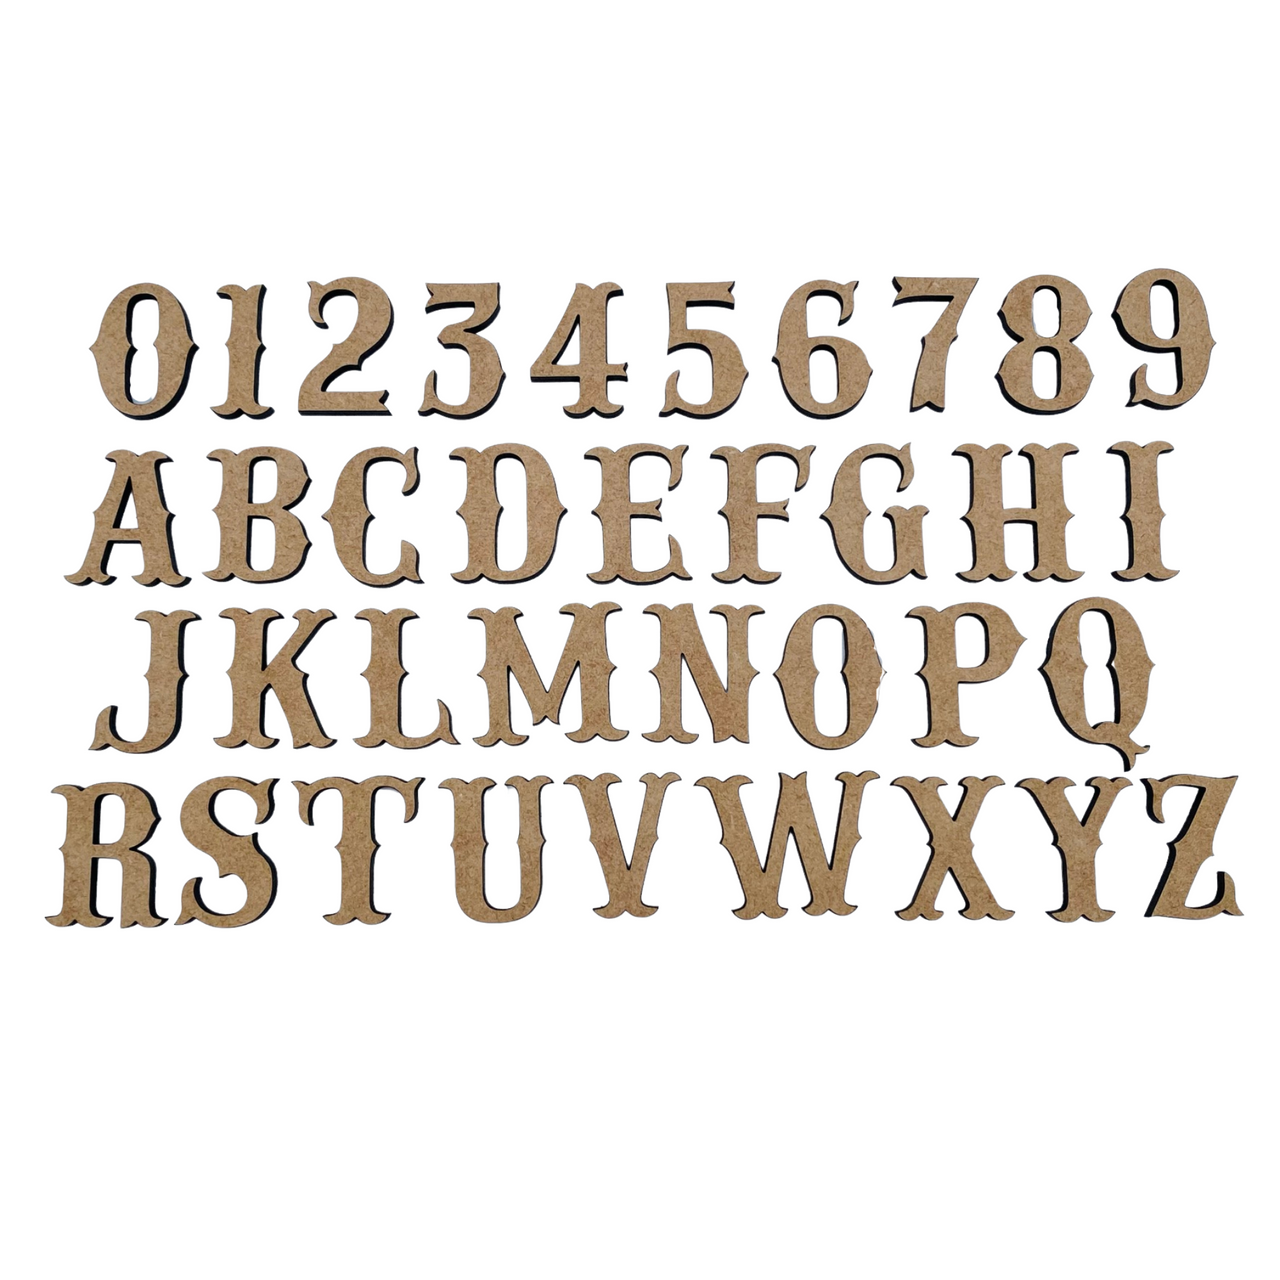 Wooden Monogram Alphabet Letters Letter M Crafts Wall Decor Magnet